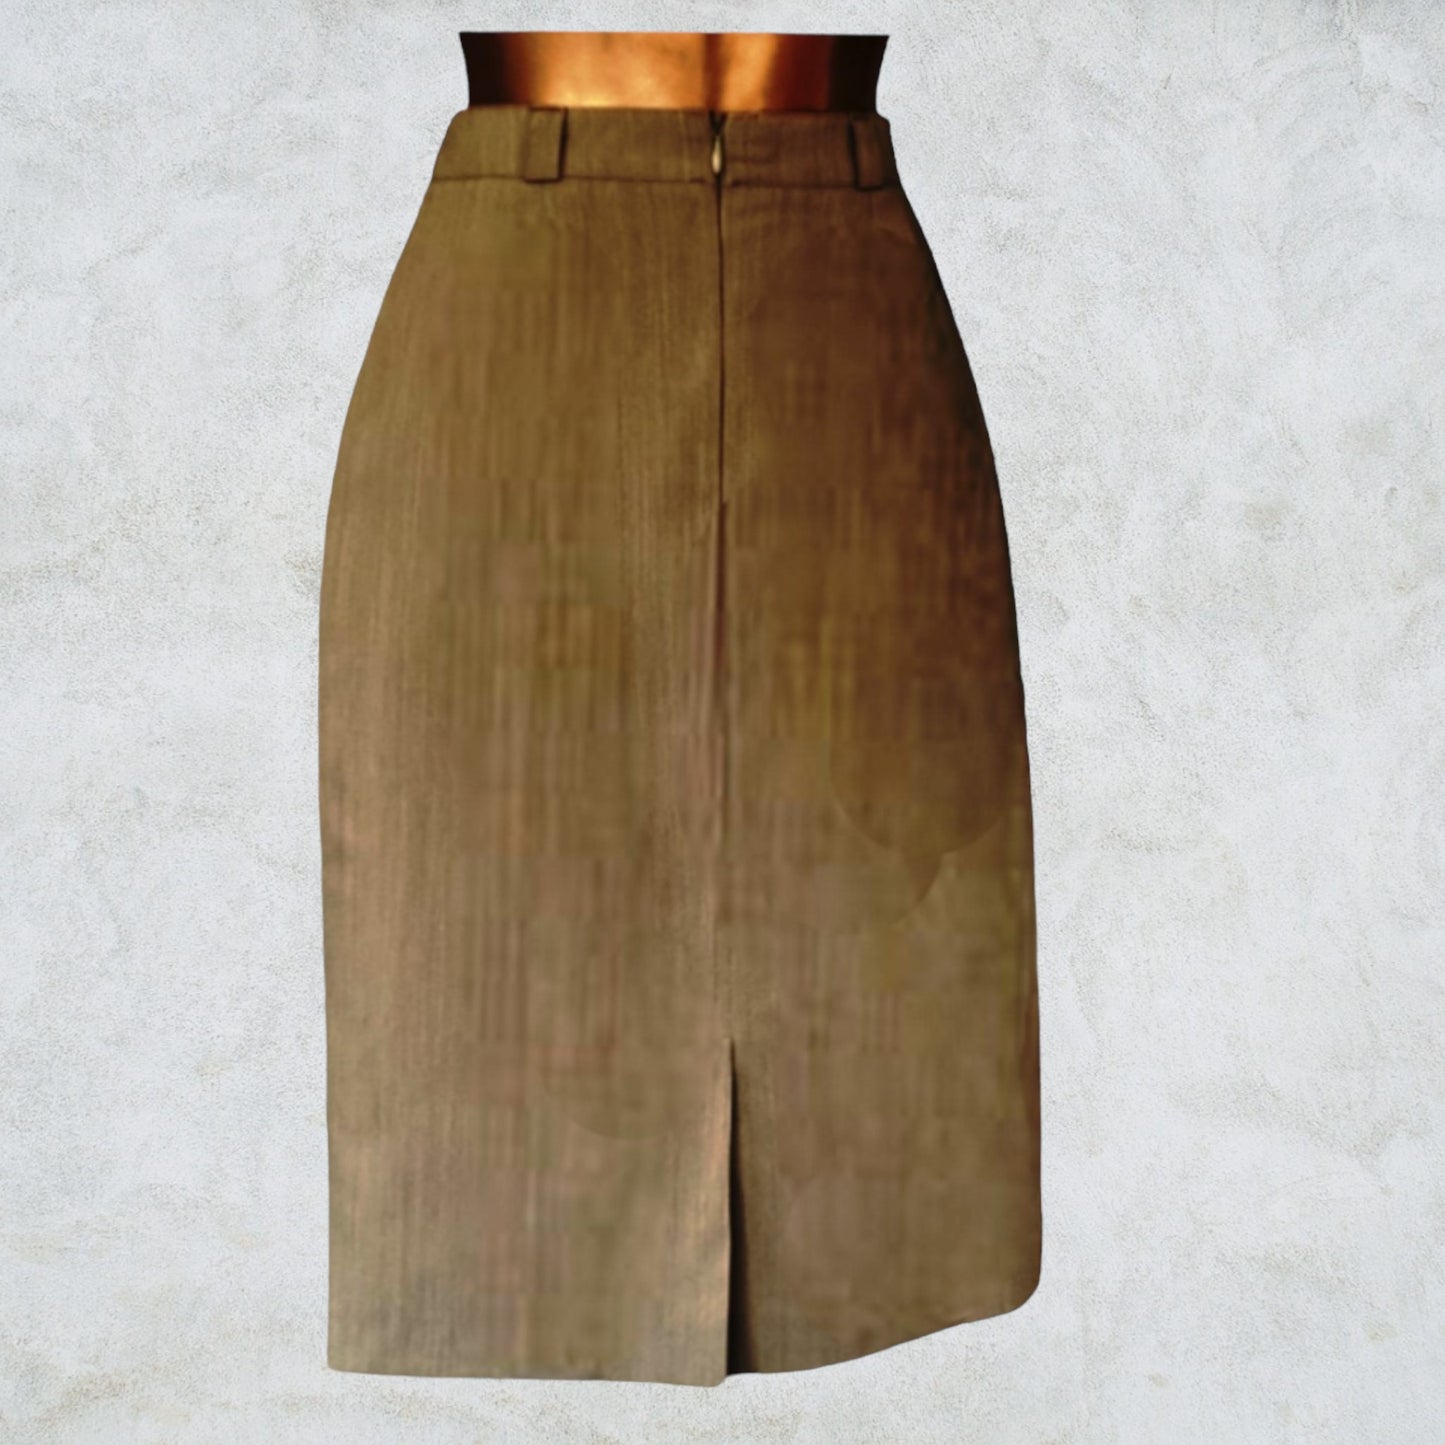 Gina B by Heidemann Sage Green Stretch Pencil Skirt UK 10 US 6 EU 38 Timeless Fashions